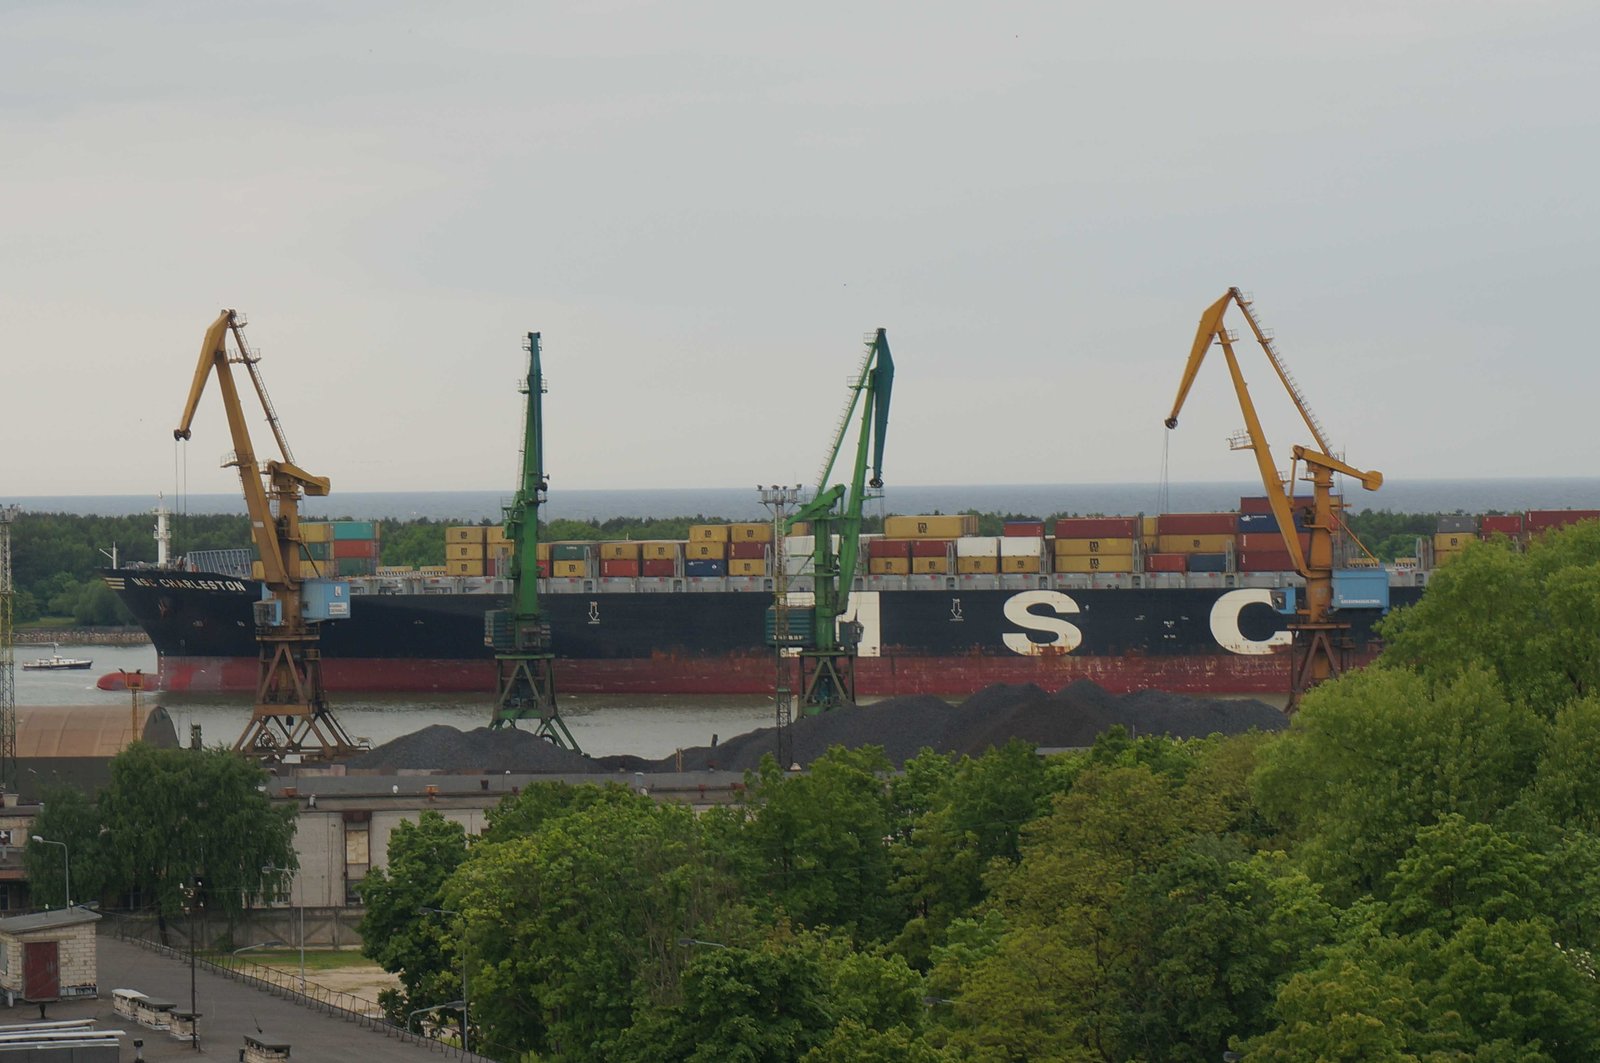 Larger loads on ships to boost Klaipėda port revenues the Lithuania